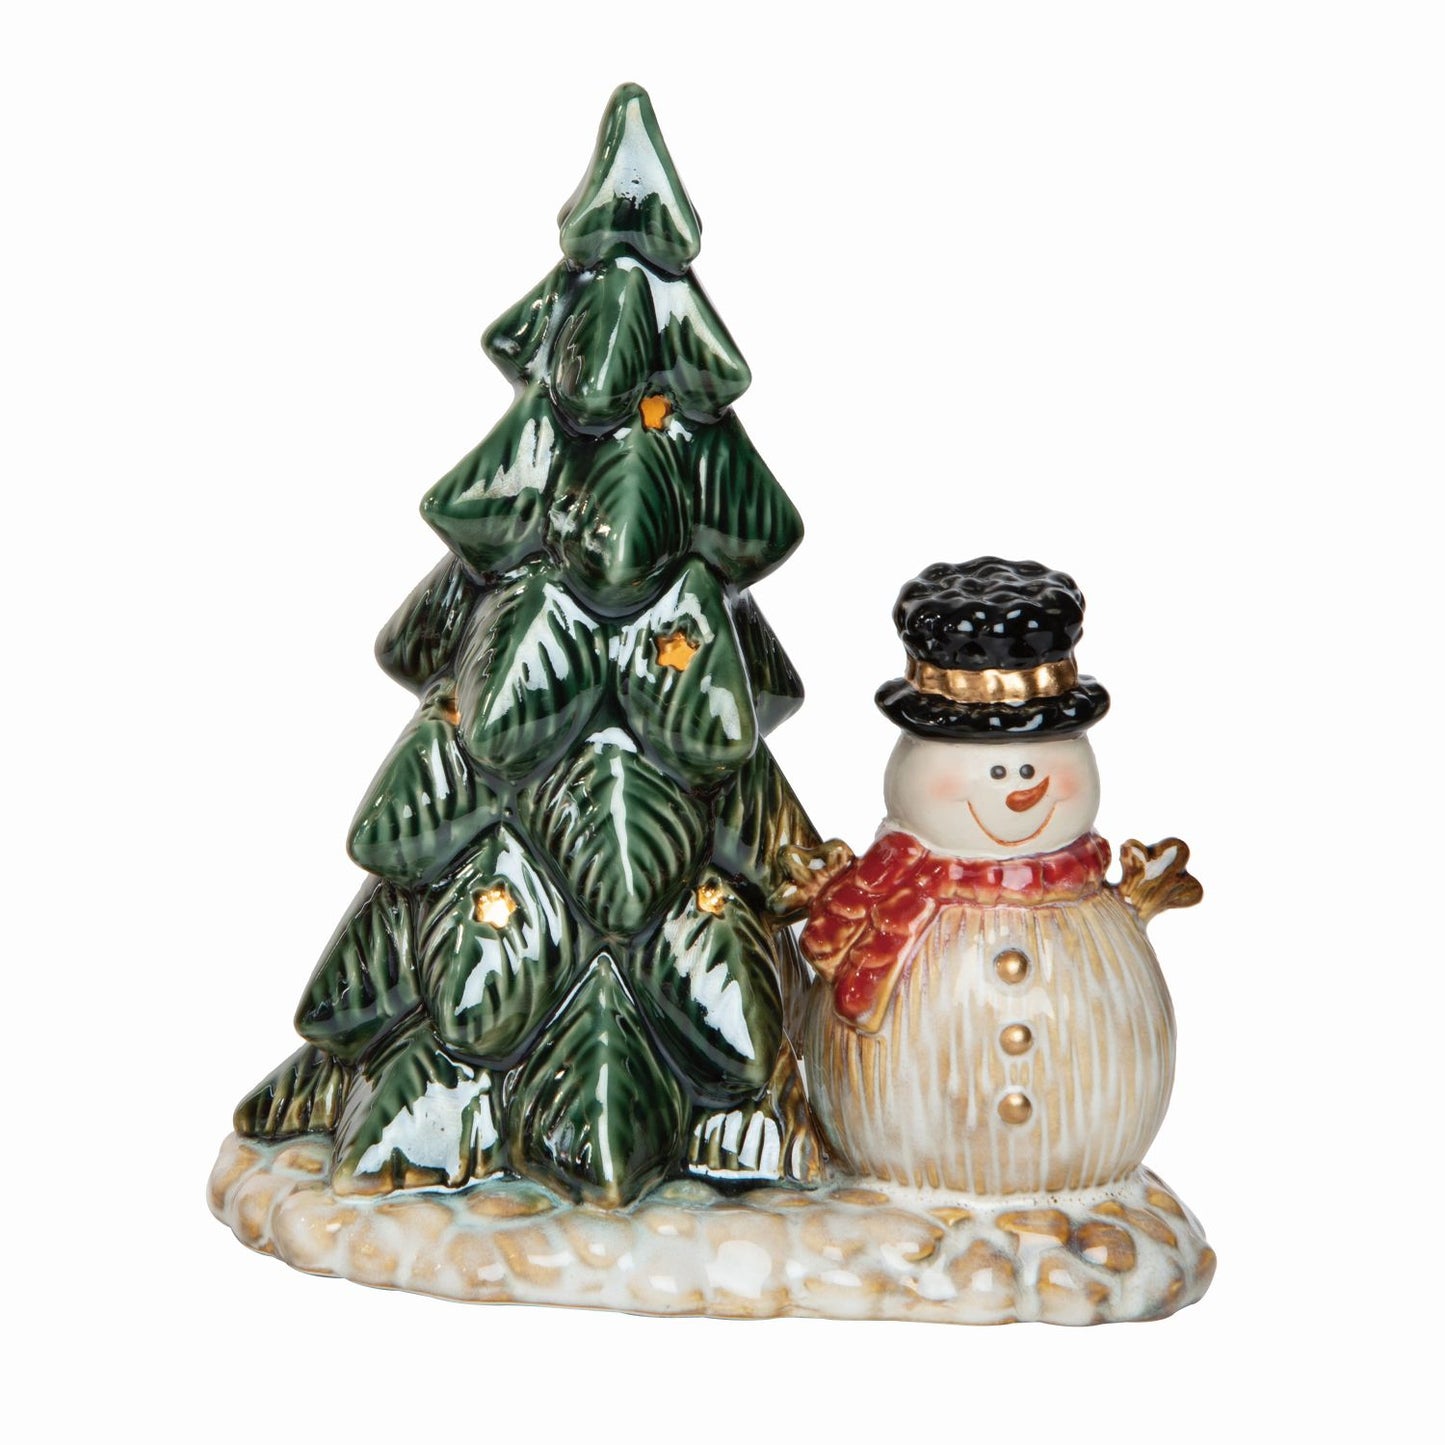 Transpac Ceramic Light Up Tree Snowman